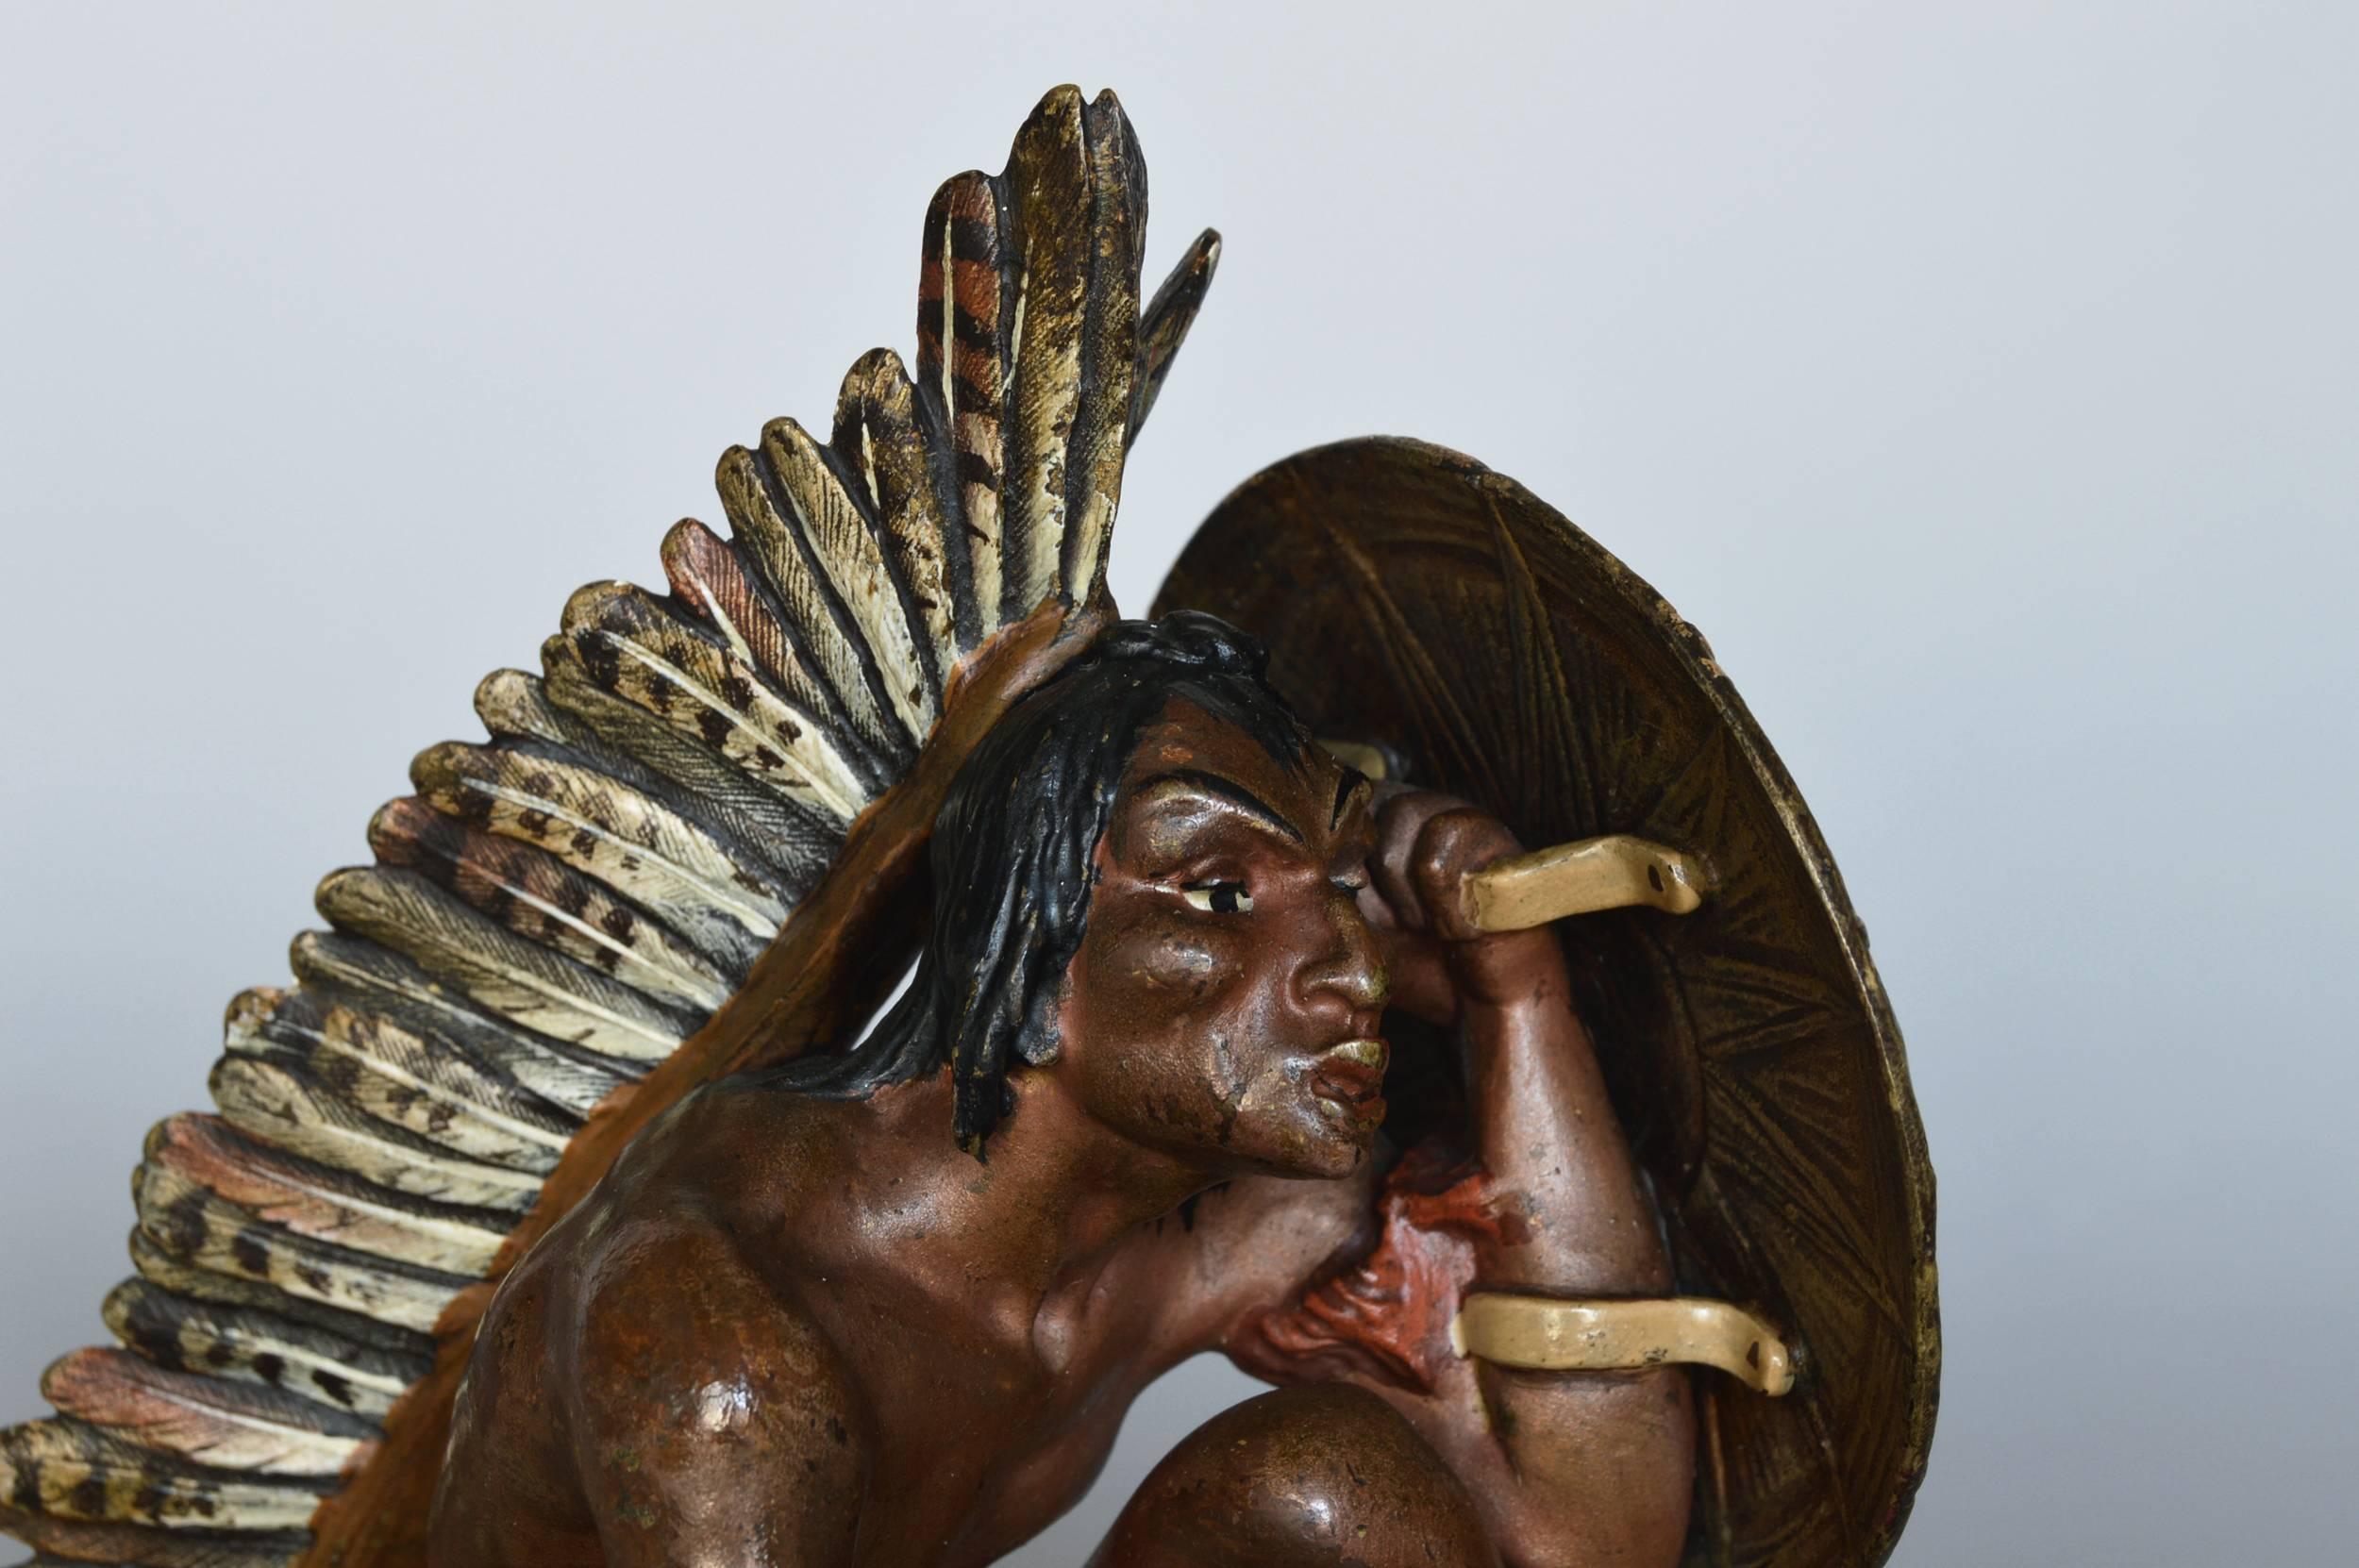 Native American Indian Sitting, bronze sculpture - Gold Figurative Sculpture by Franz Bergmann